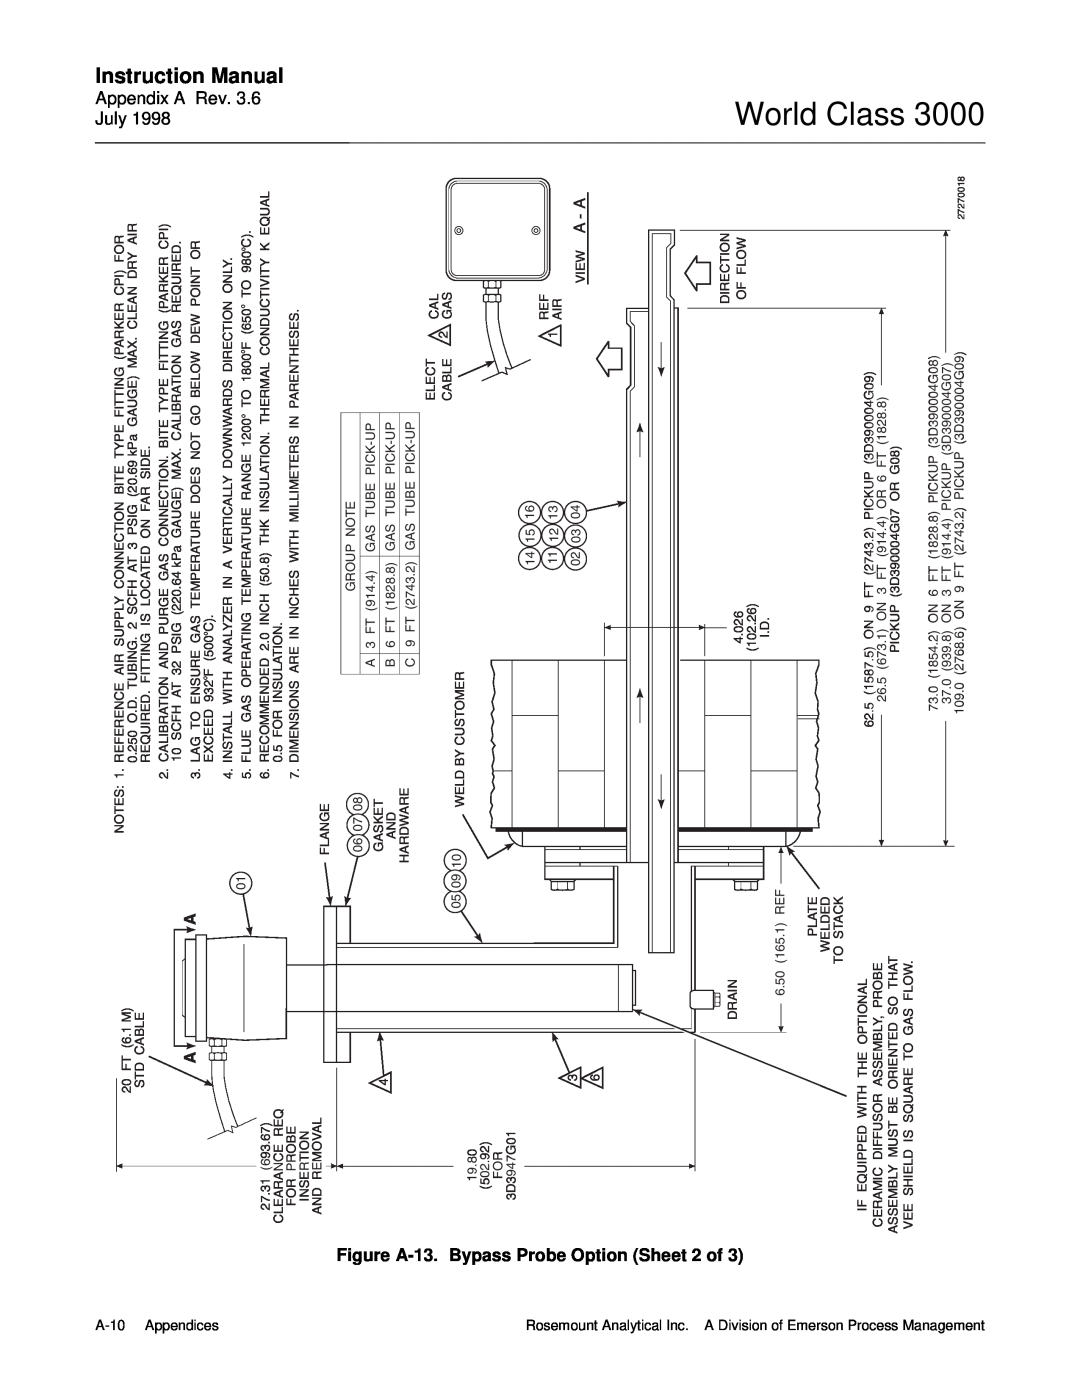 Emerson 3000 manual World Class, Figure A-13.Bypass Probe Option Sheet 2 of, A-10Appendices 